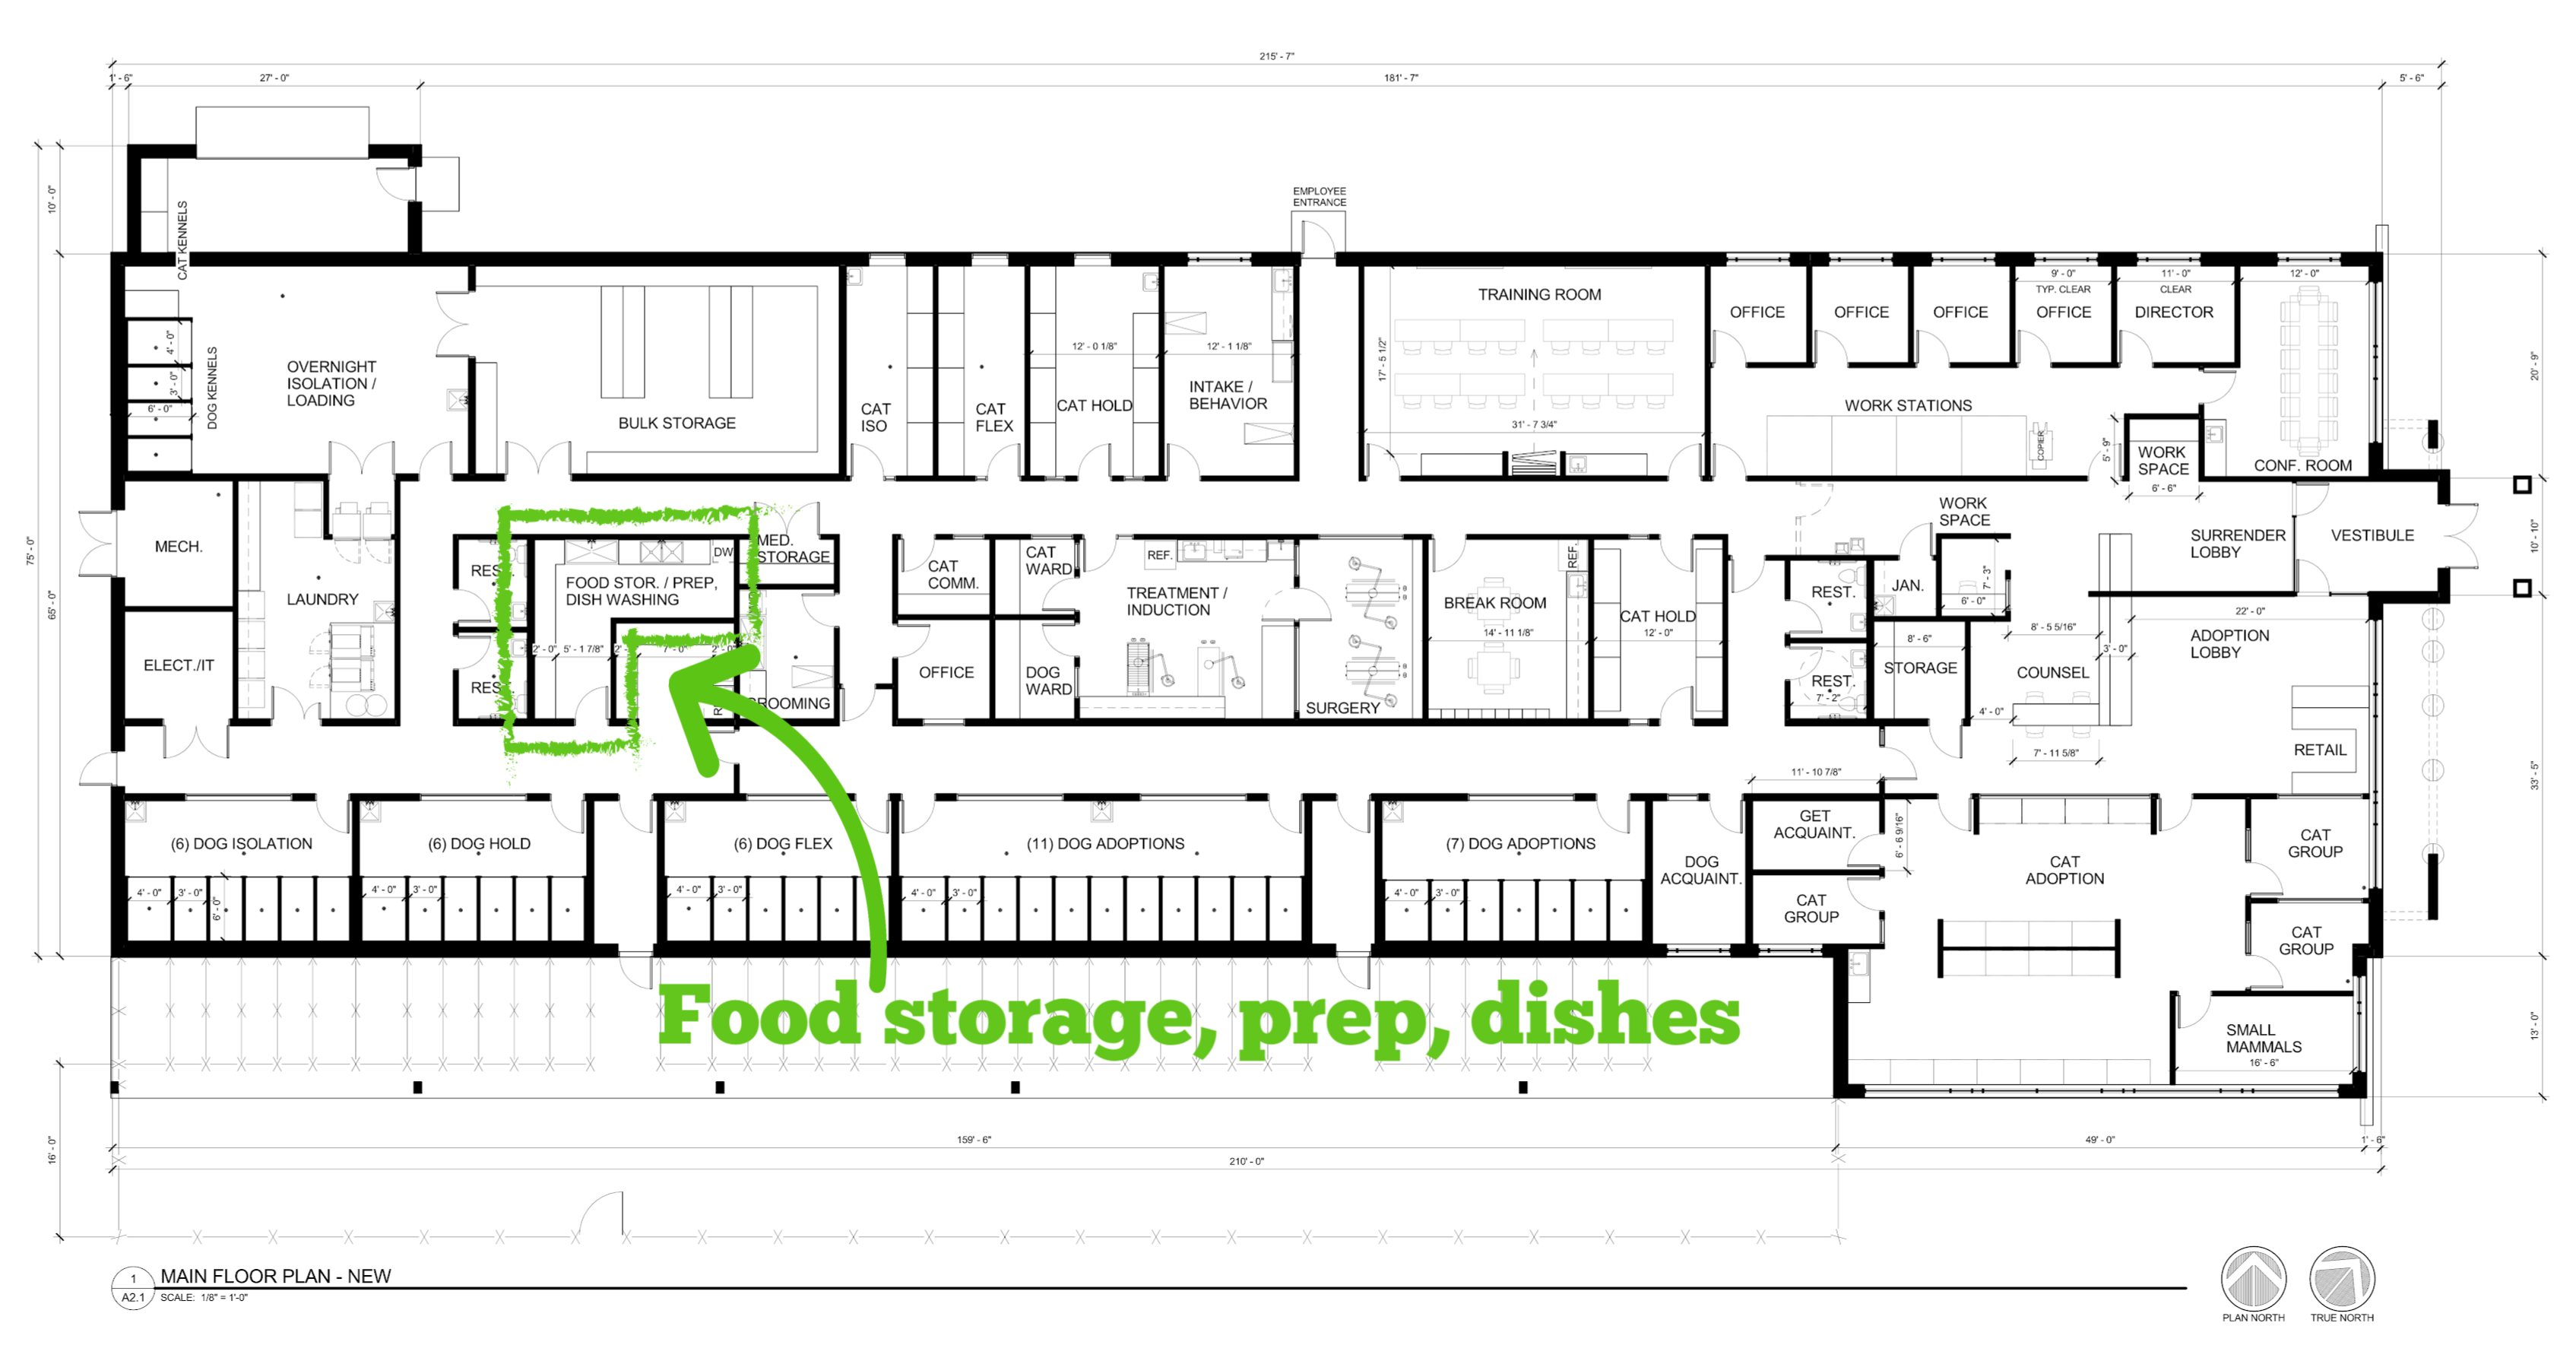 Food storage, prep, dishes